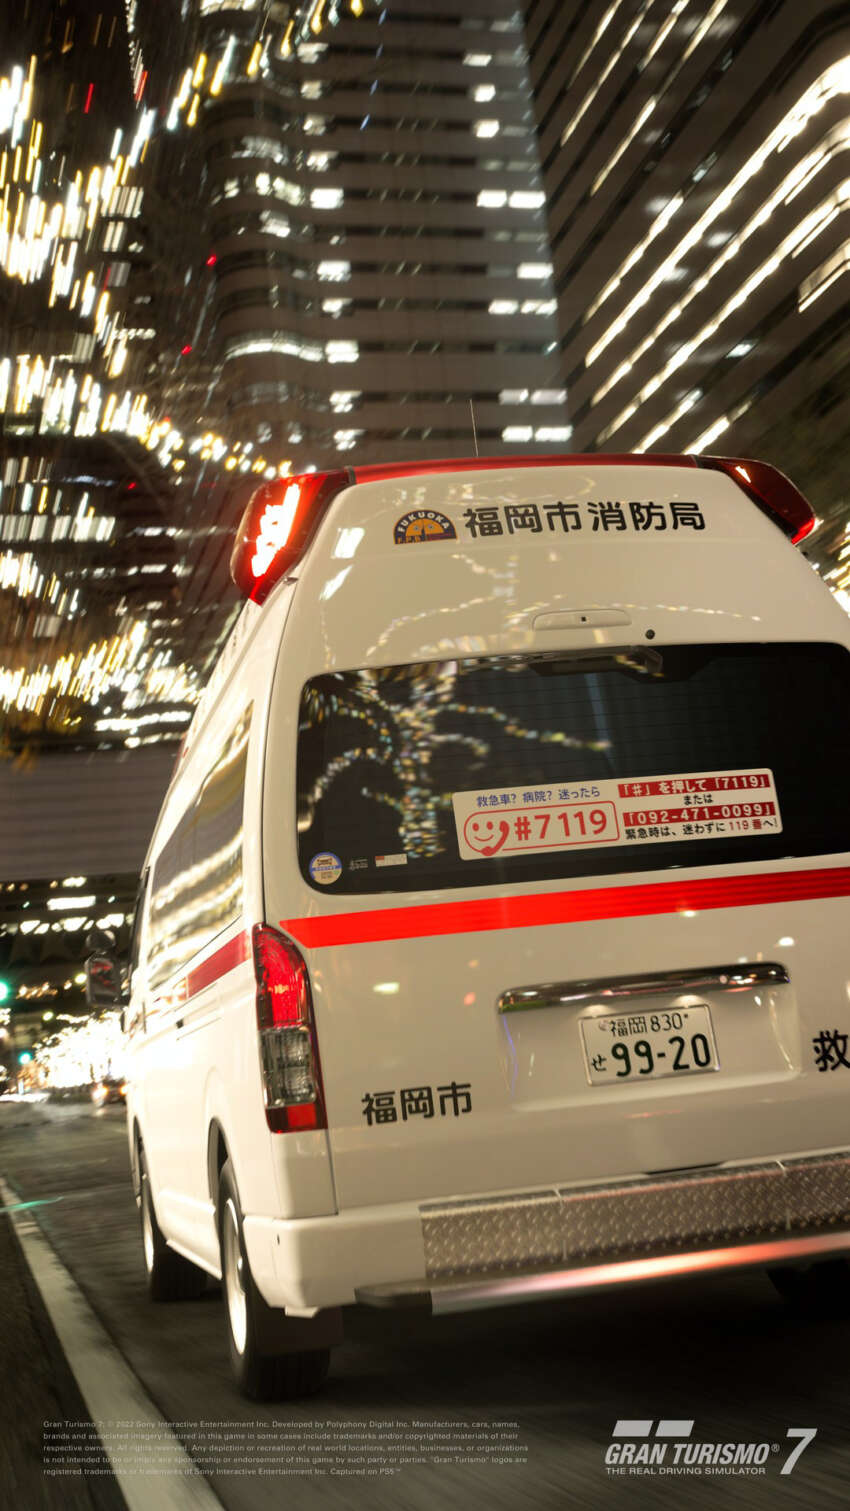 Toyota Himedic ambulance comes to <em>Gran Turismo 7</em> 1652375